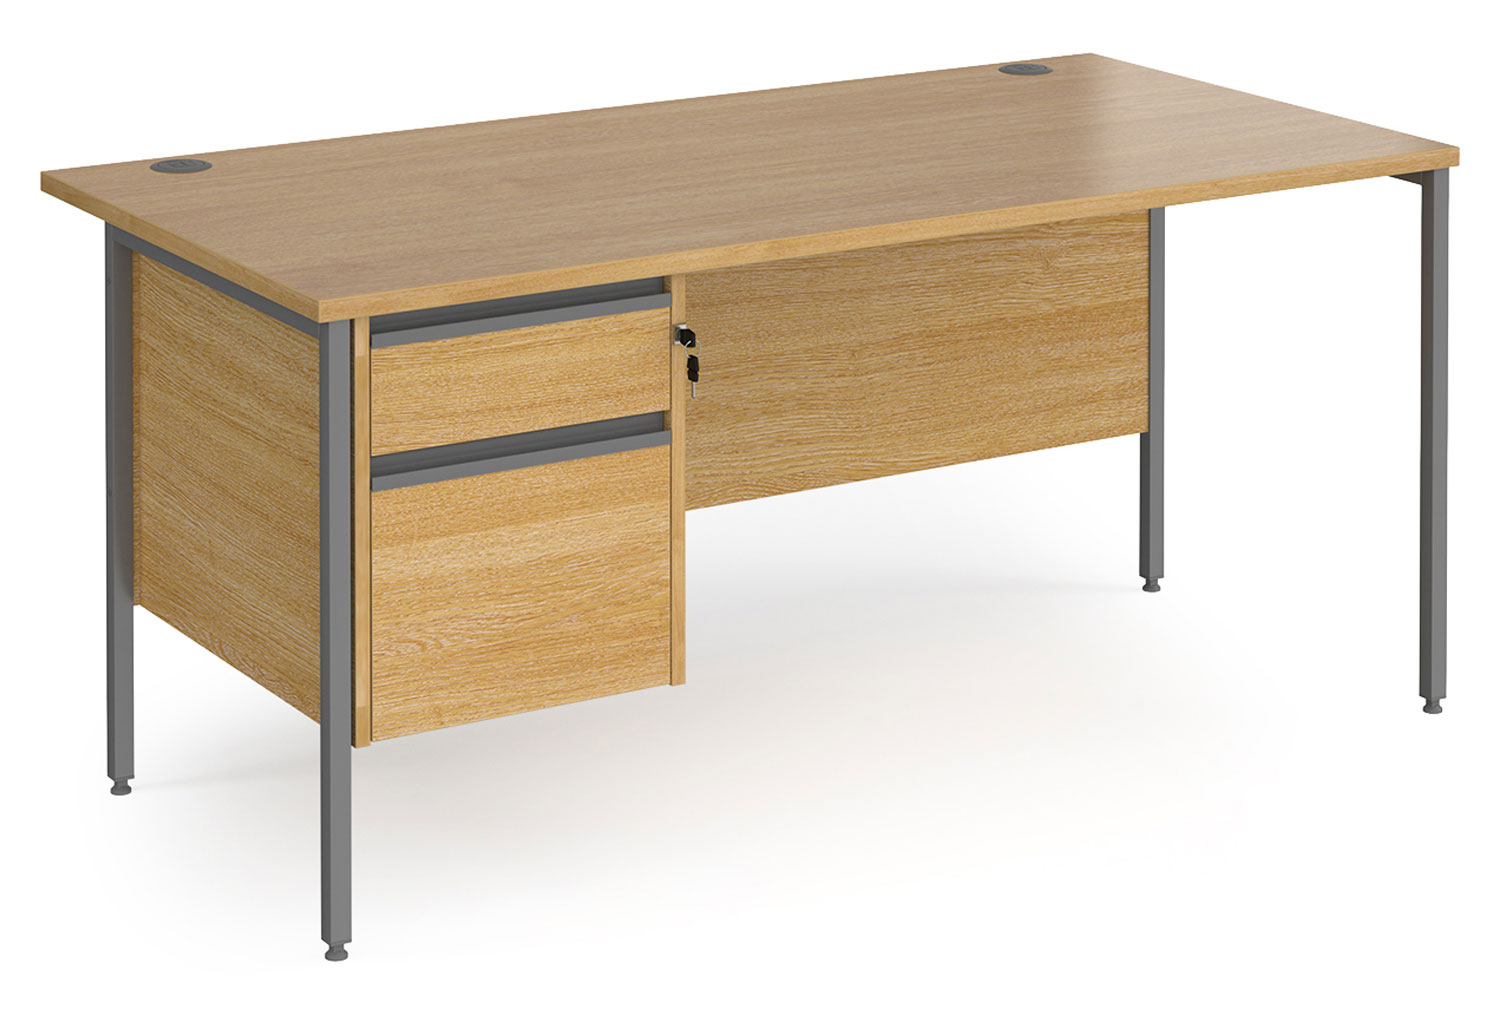 Value Line Classic+ Rectangular H-Leg Office Desk 2 Drawers (Graphite Leg), 160wx80dx73h (cm), Oak, Express Delivery